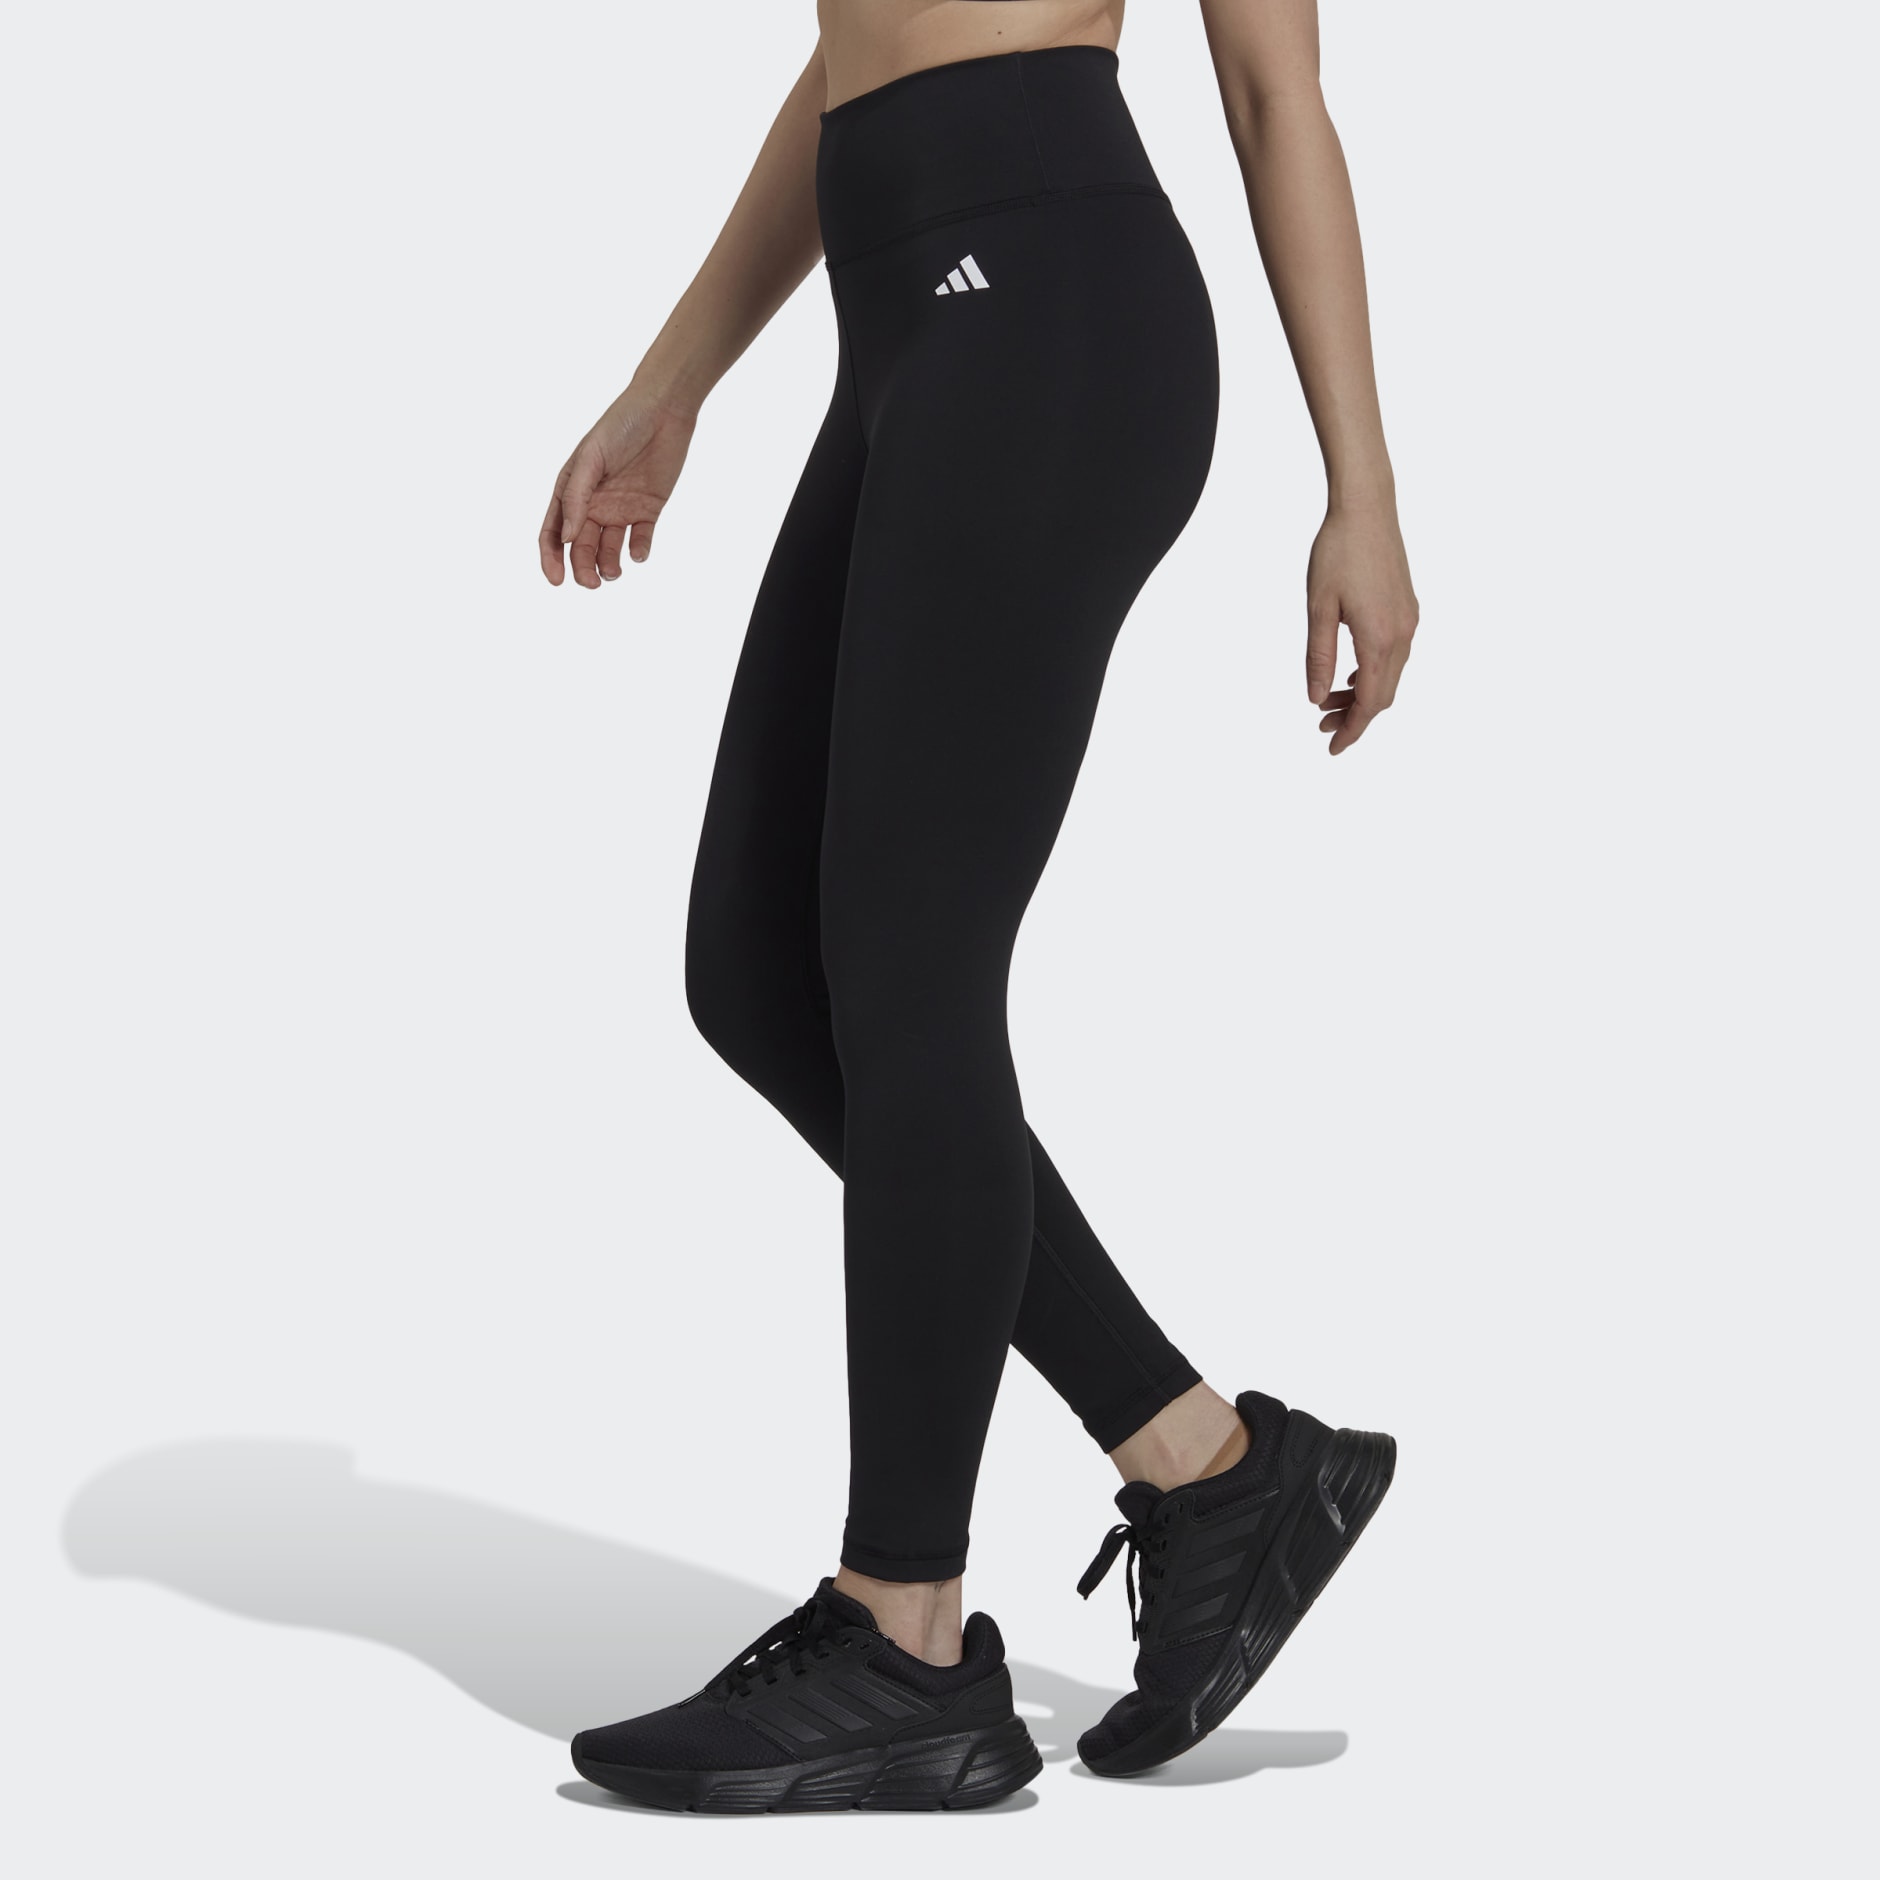 adidas Leggings for Women - Cotton Leggings - Black Leggings - High Waisted  - 7/8 Length at Amazon Women's Clothing store